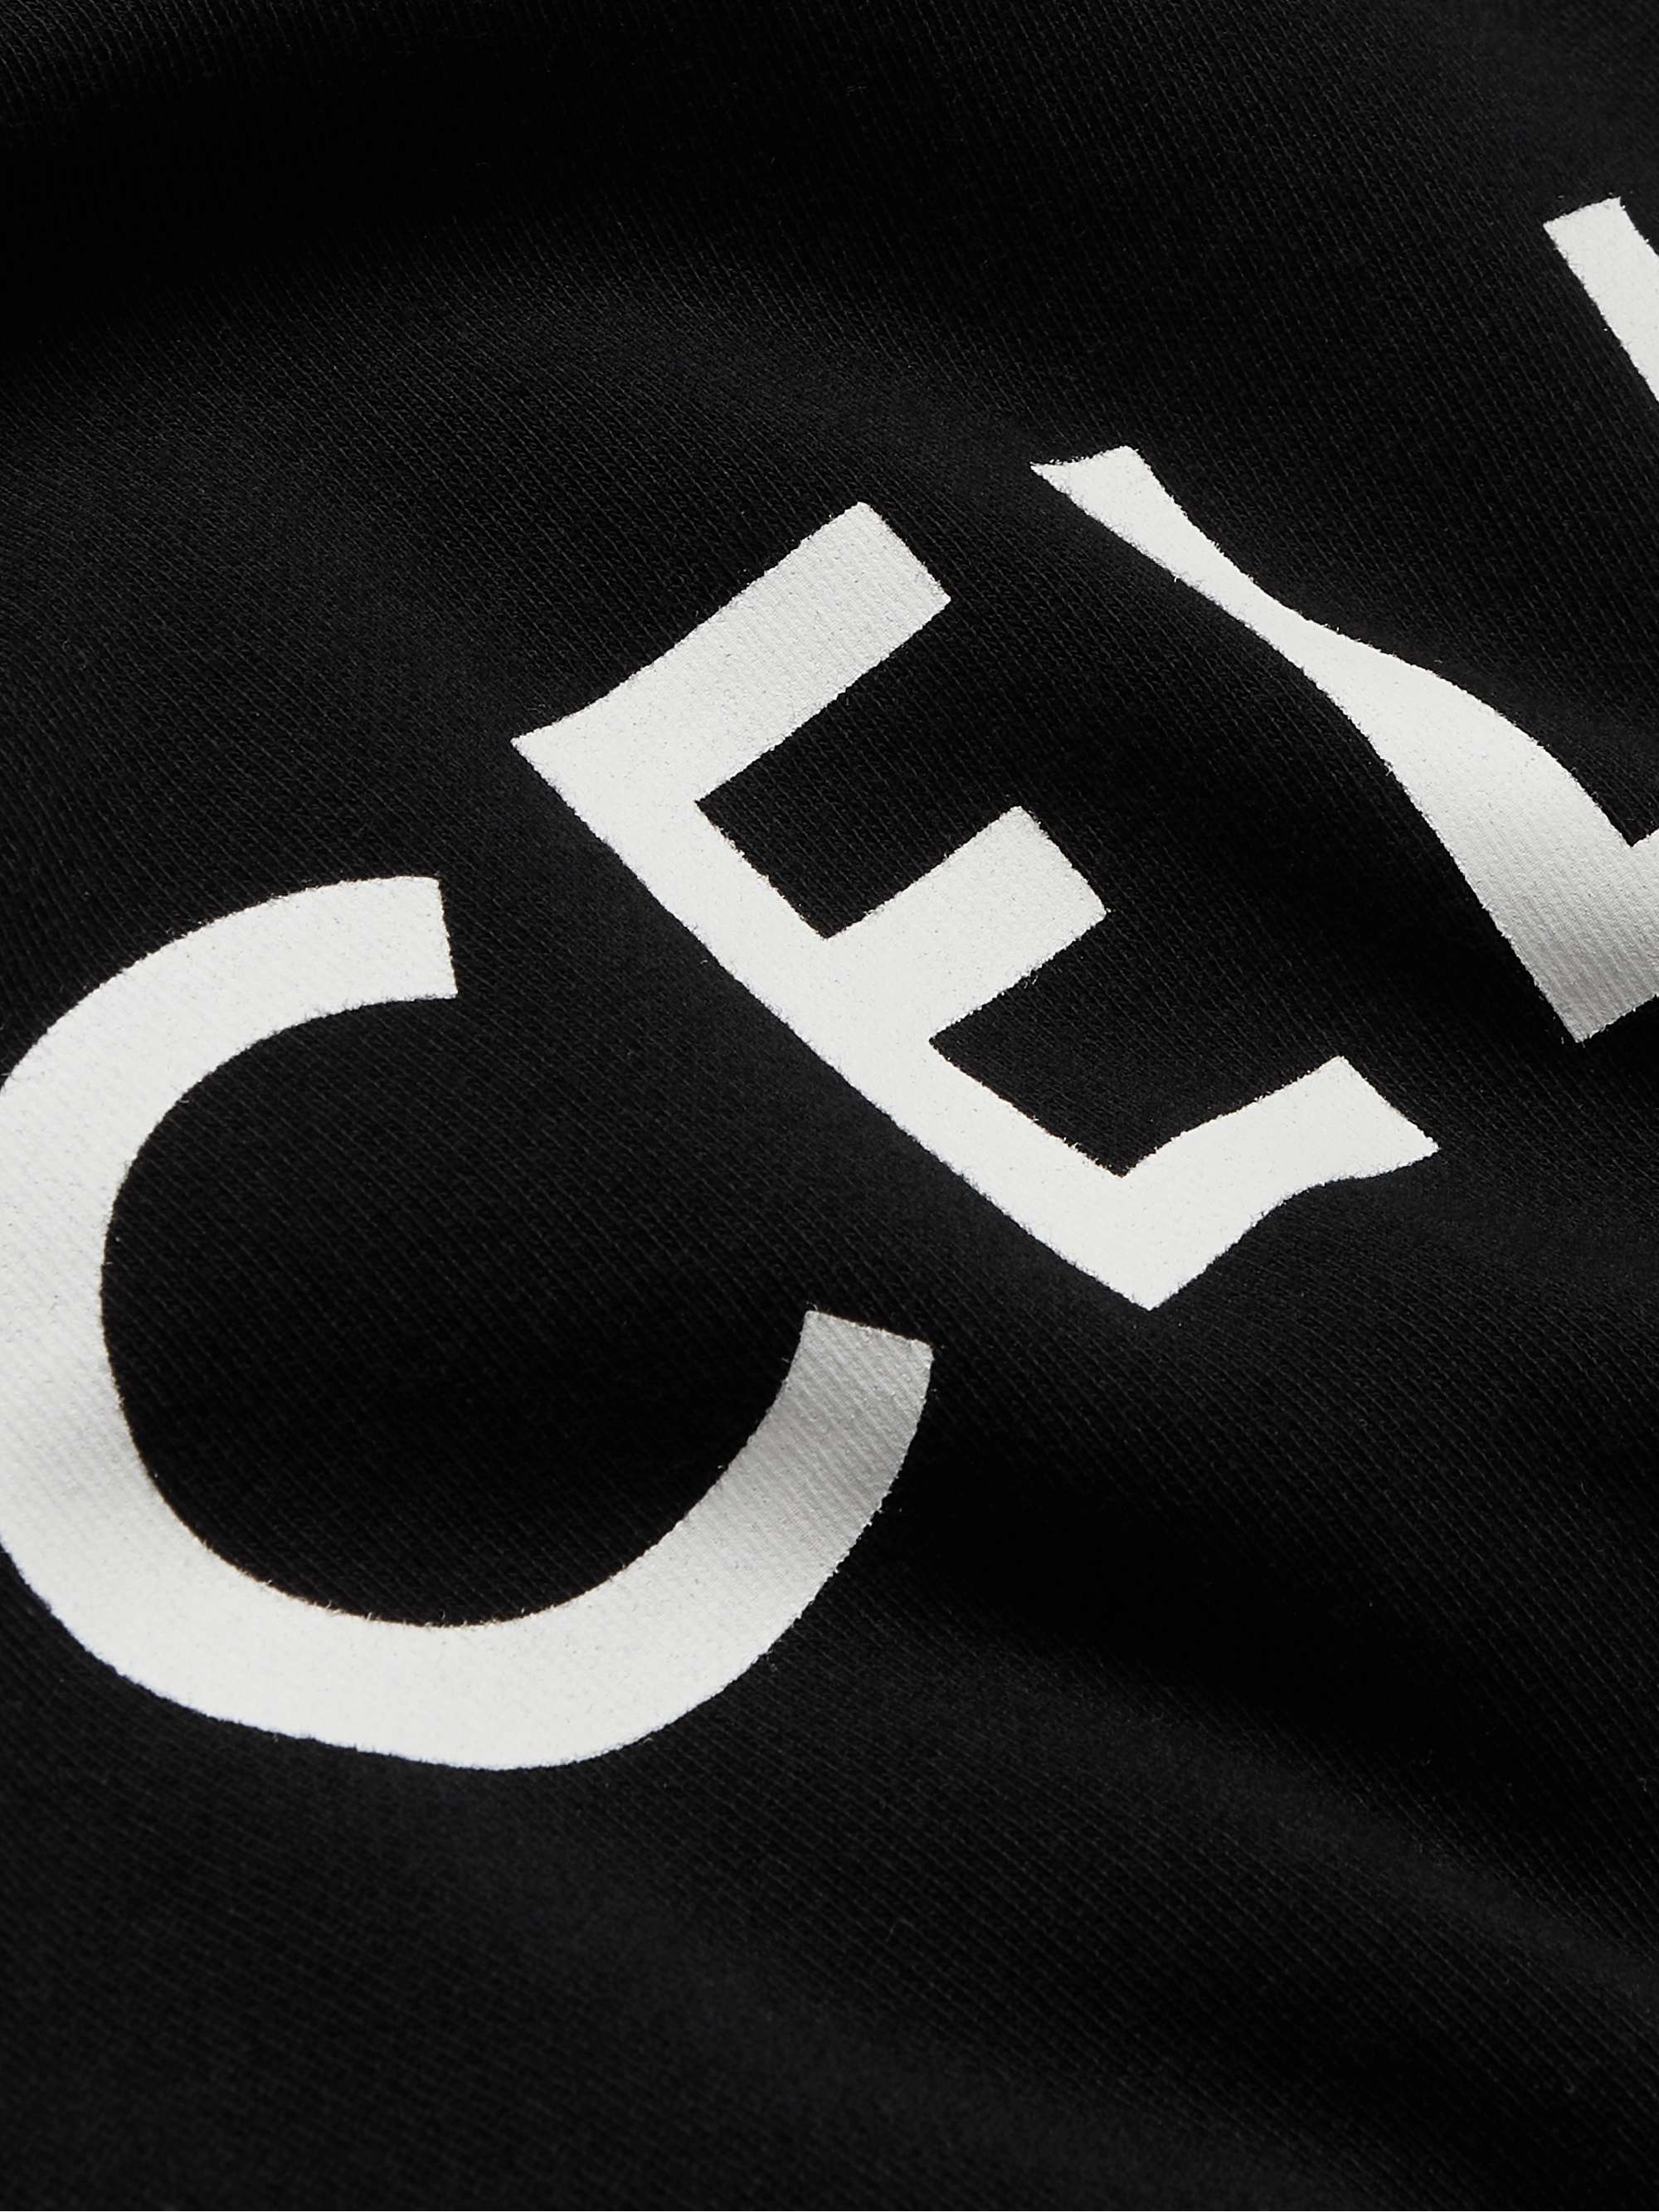 CELINE HOMME Layered Logo-Print Cotton-Jersey Hoodie